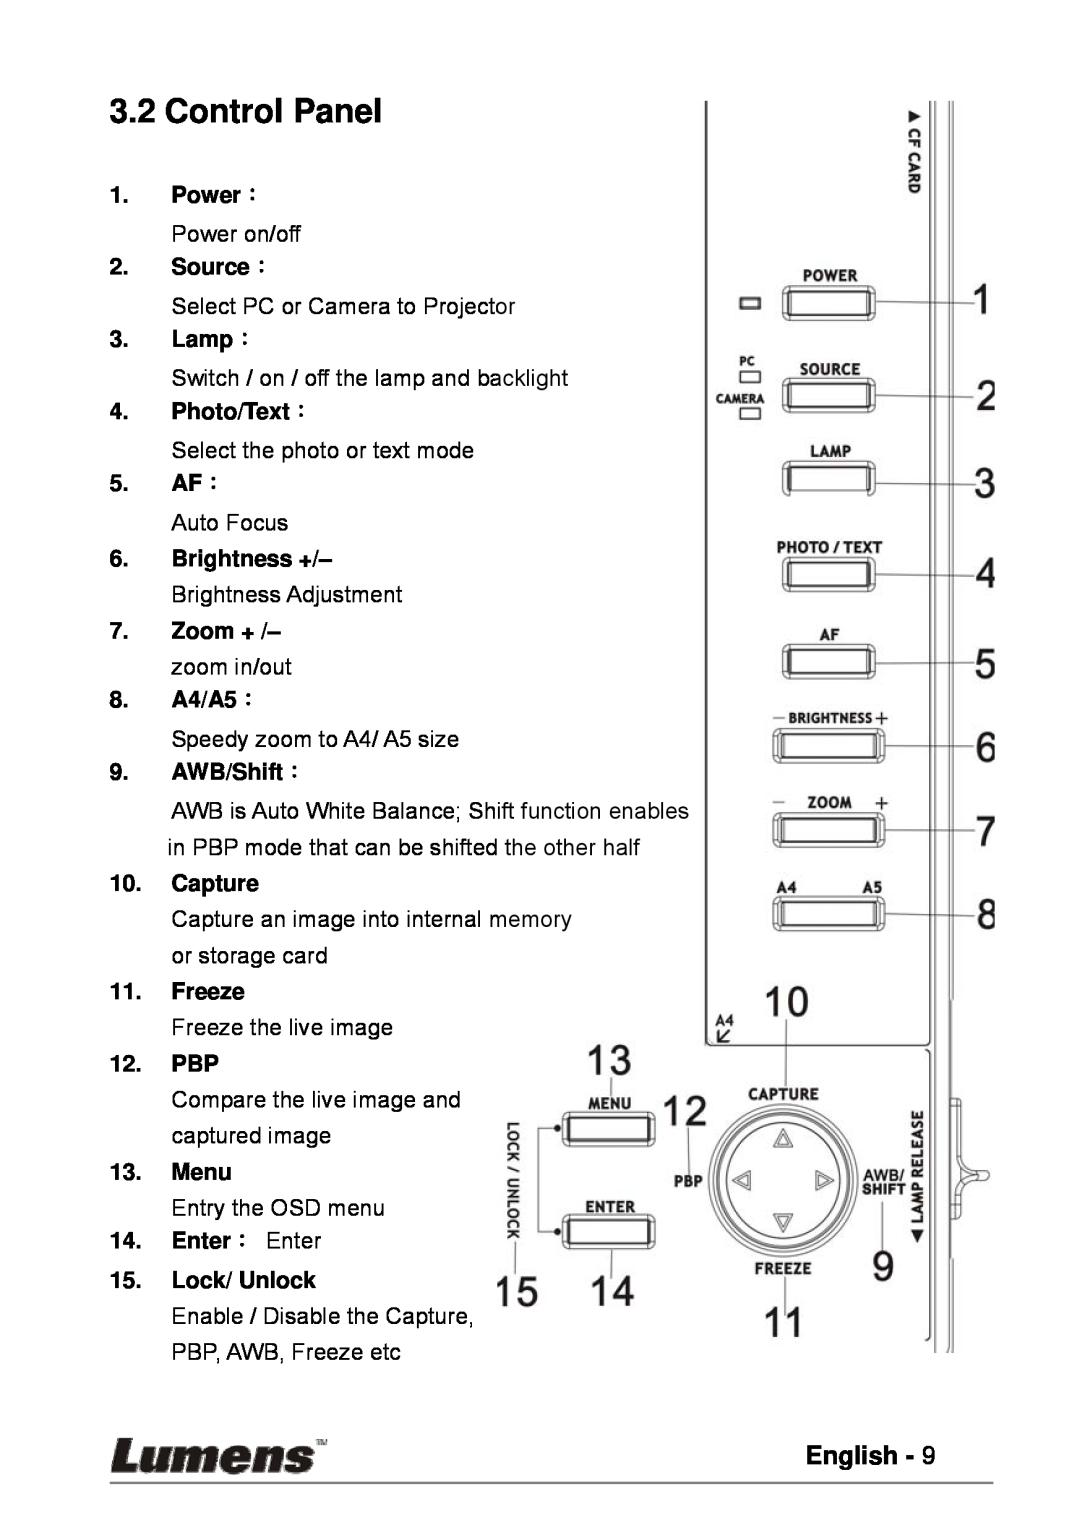 Lumens Technology PS600 user manual Control Panel, English 